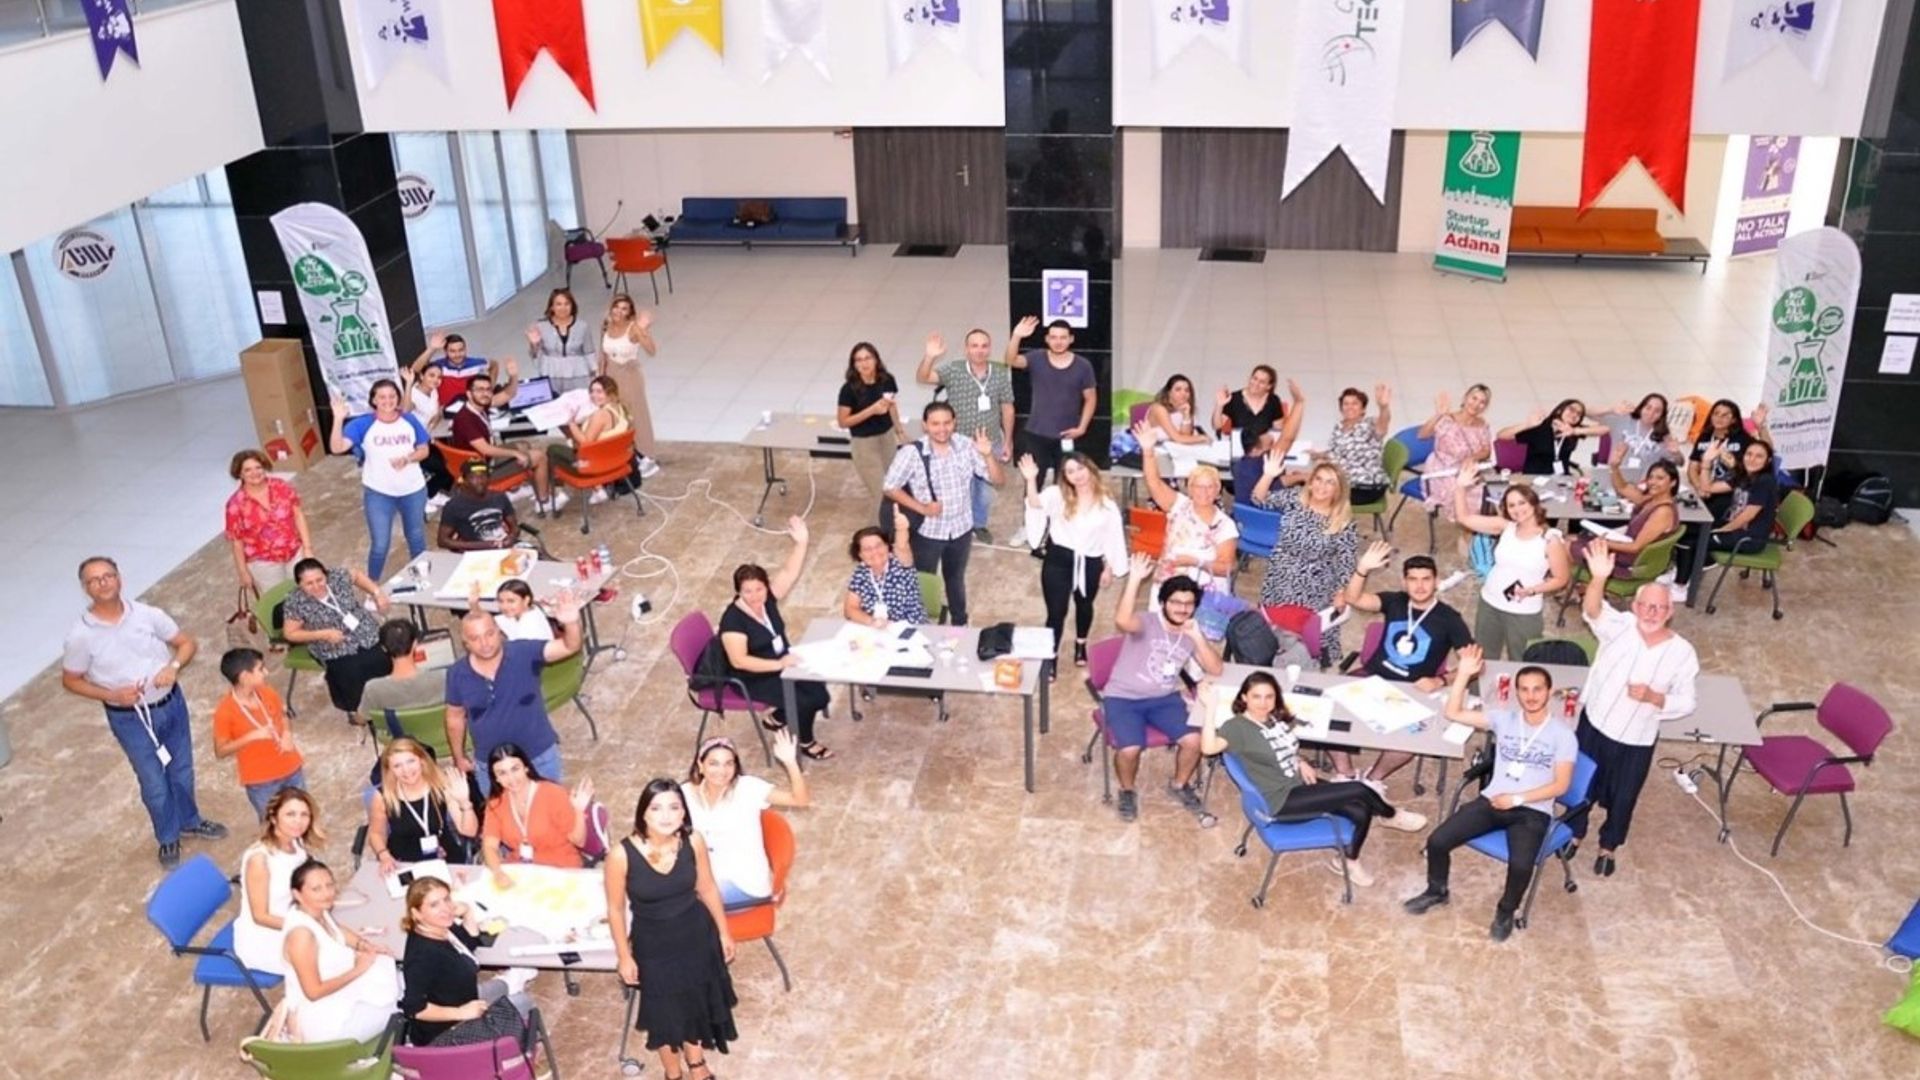 Image of team members at the Cukurova Technopark in Turkey